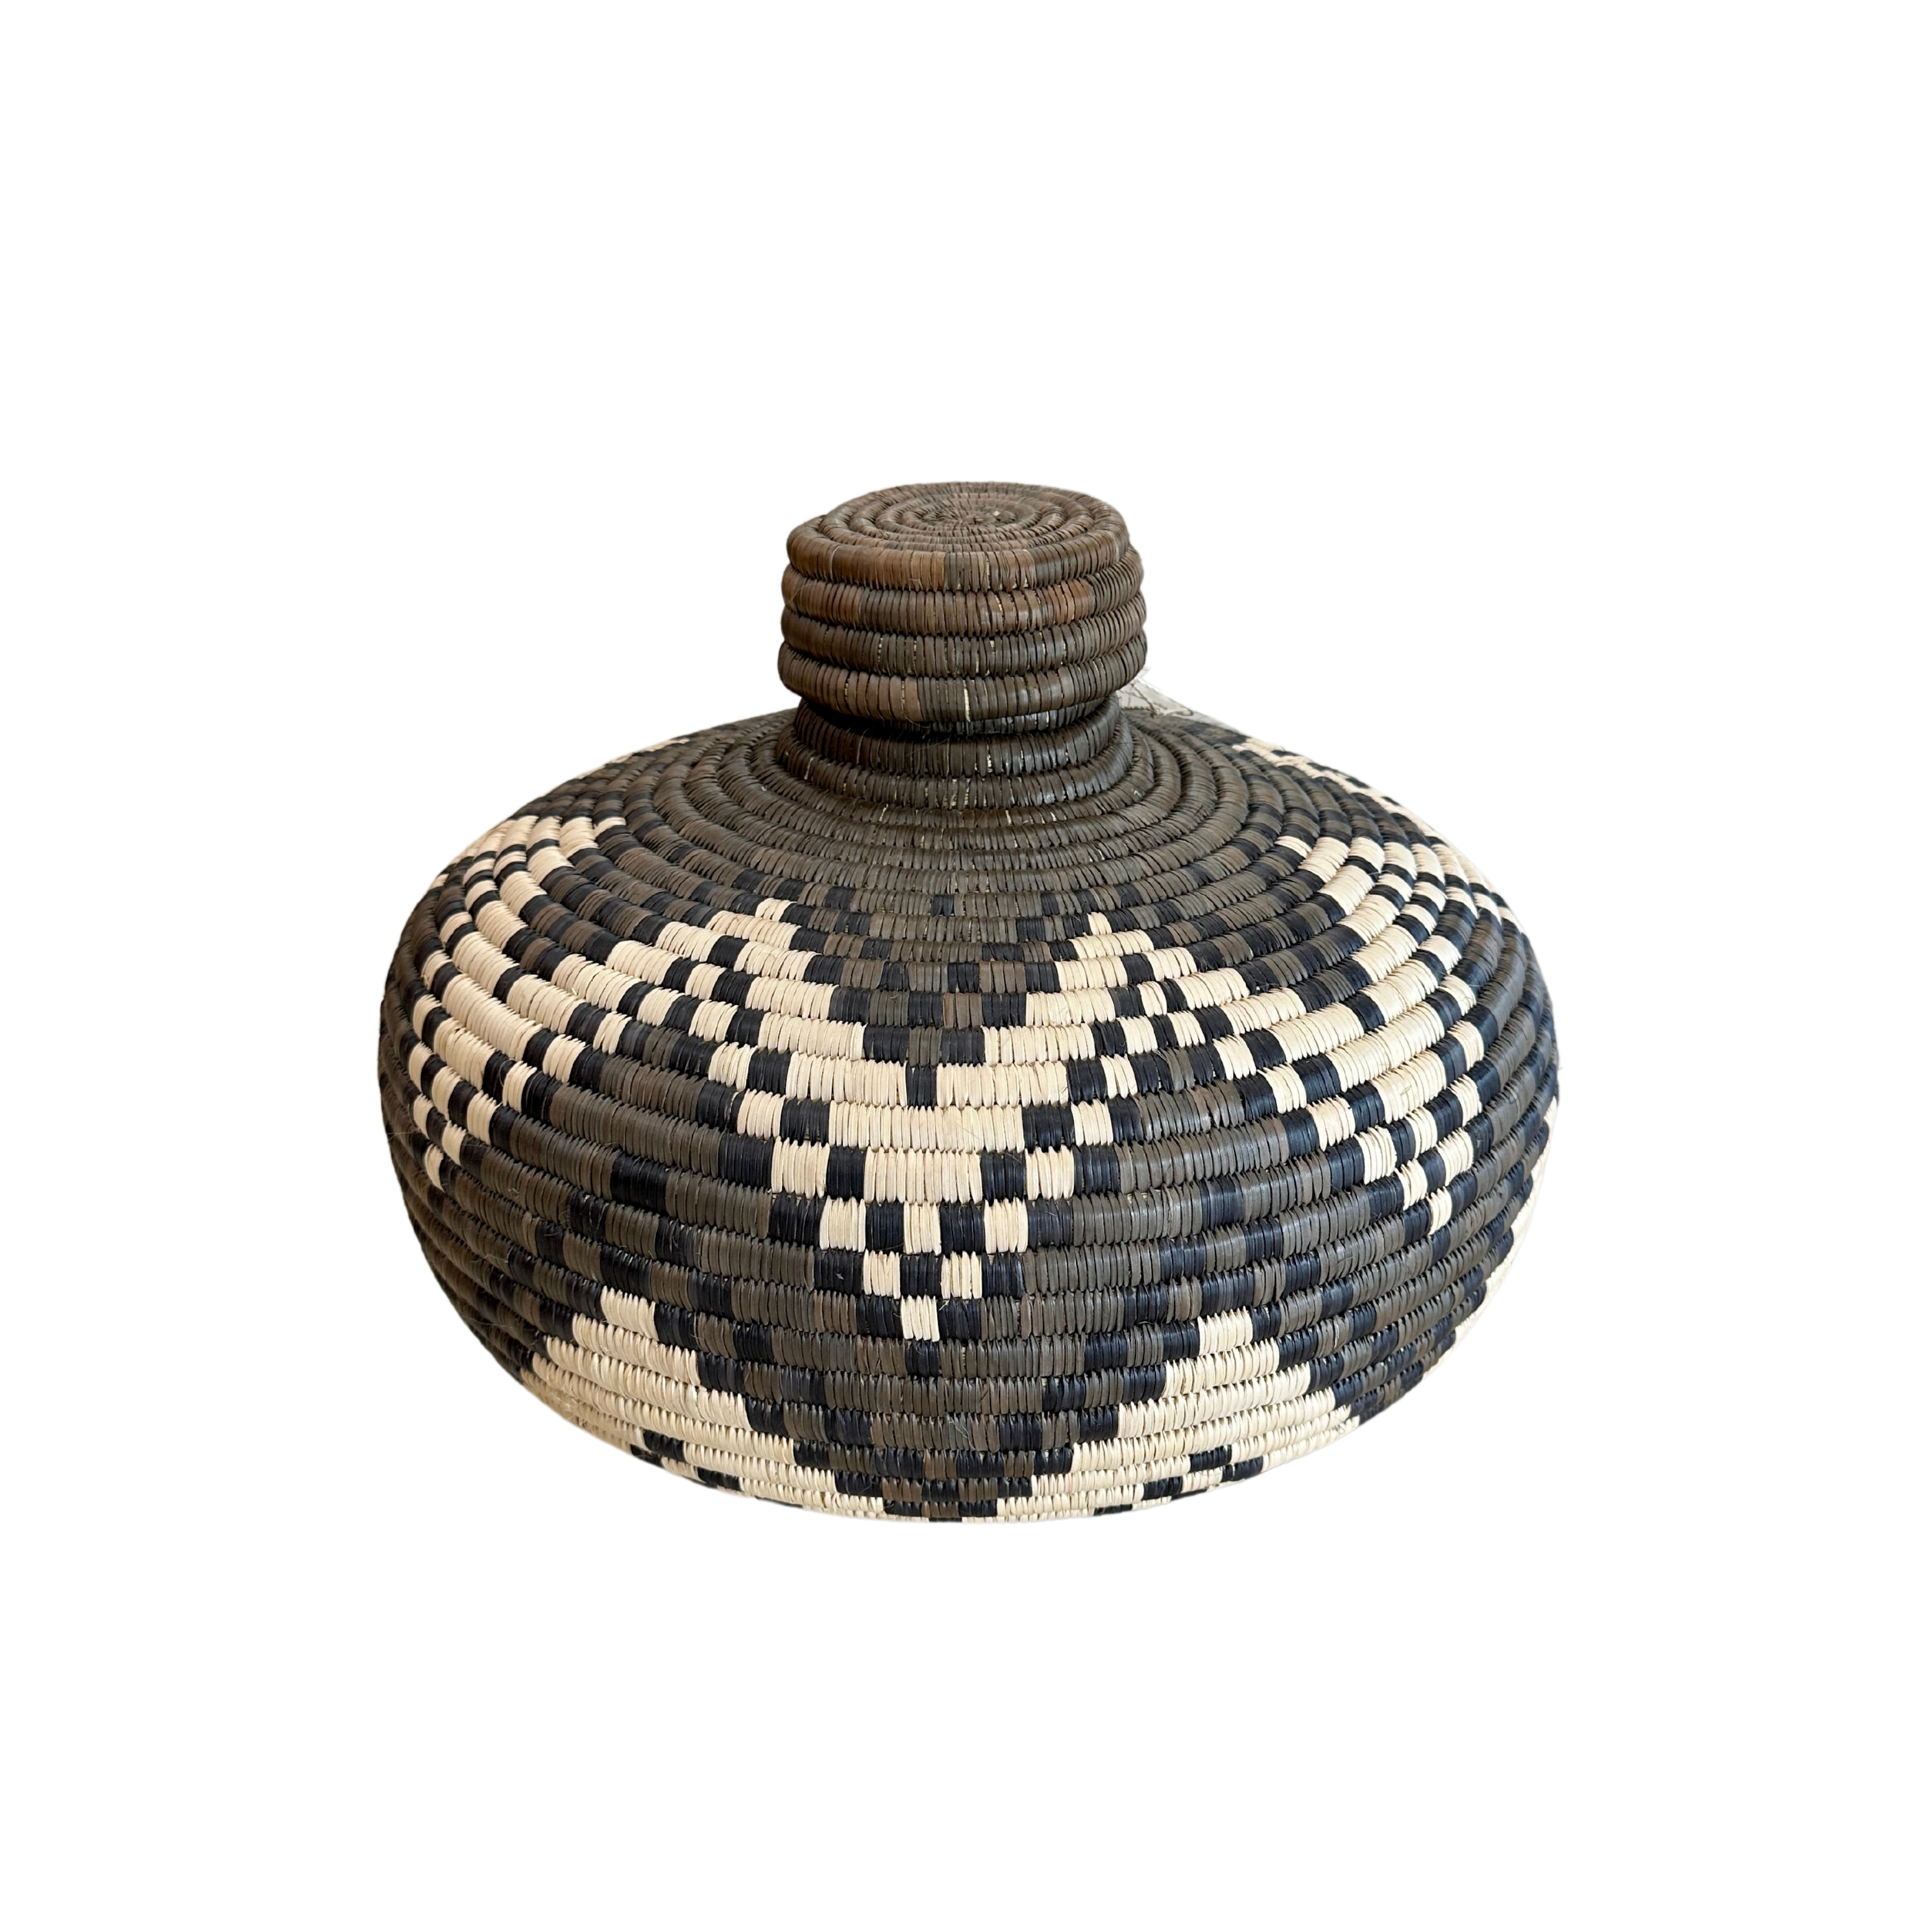 Hand Weaved Isichumo Bottle Neck Basket - The Bonie Basket